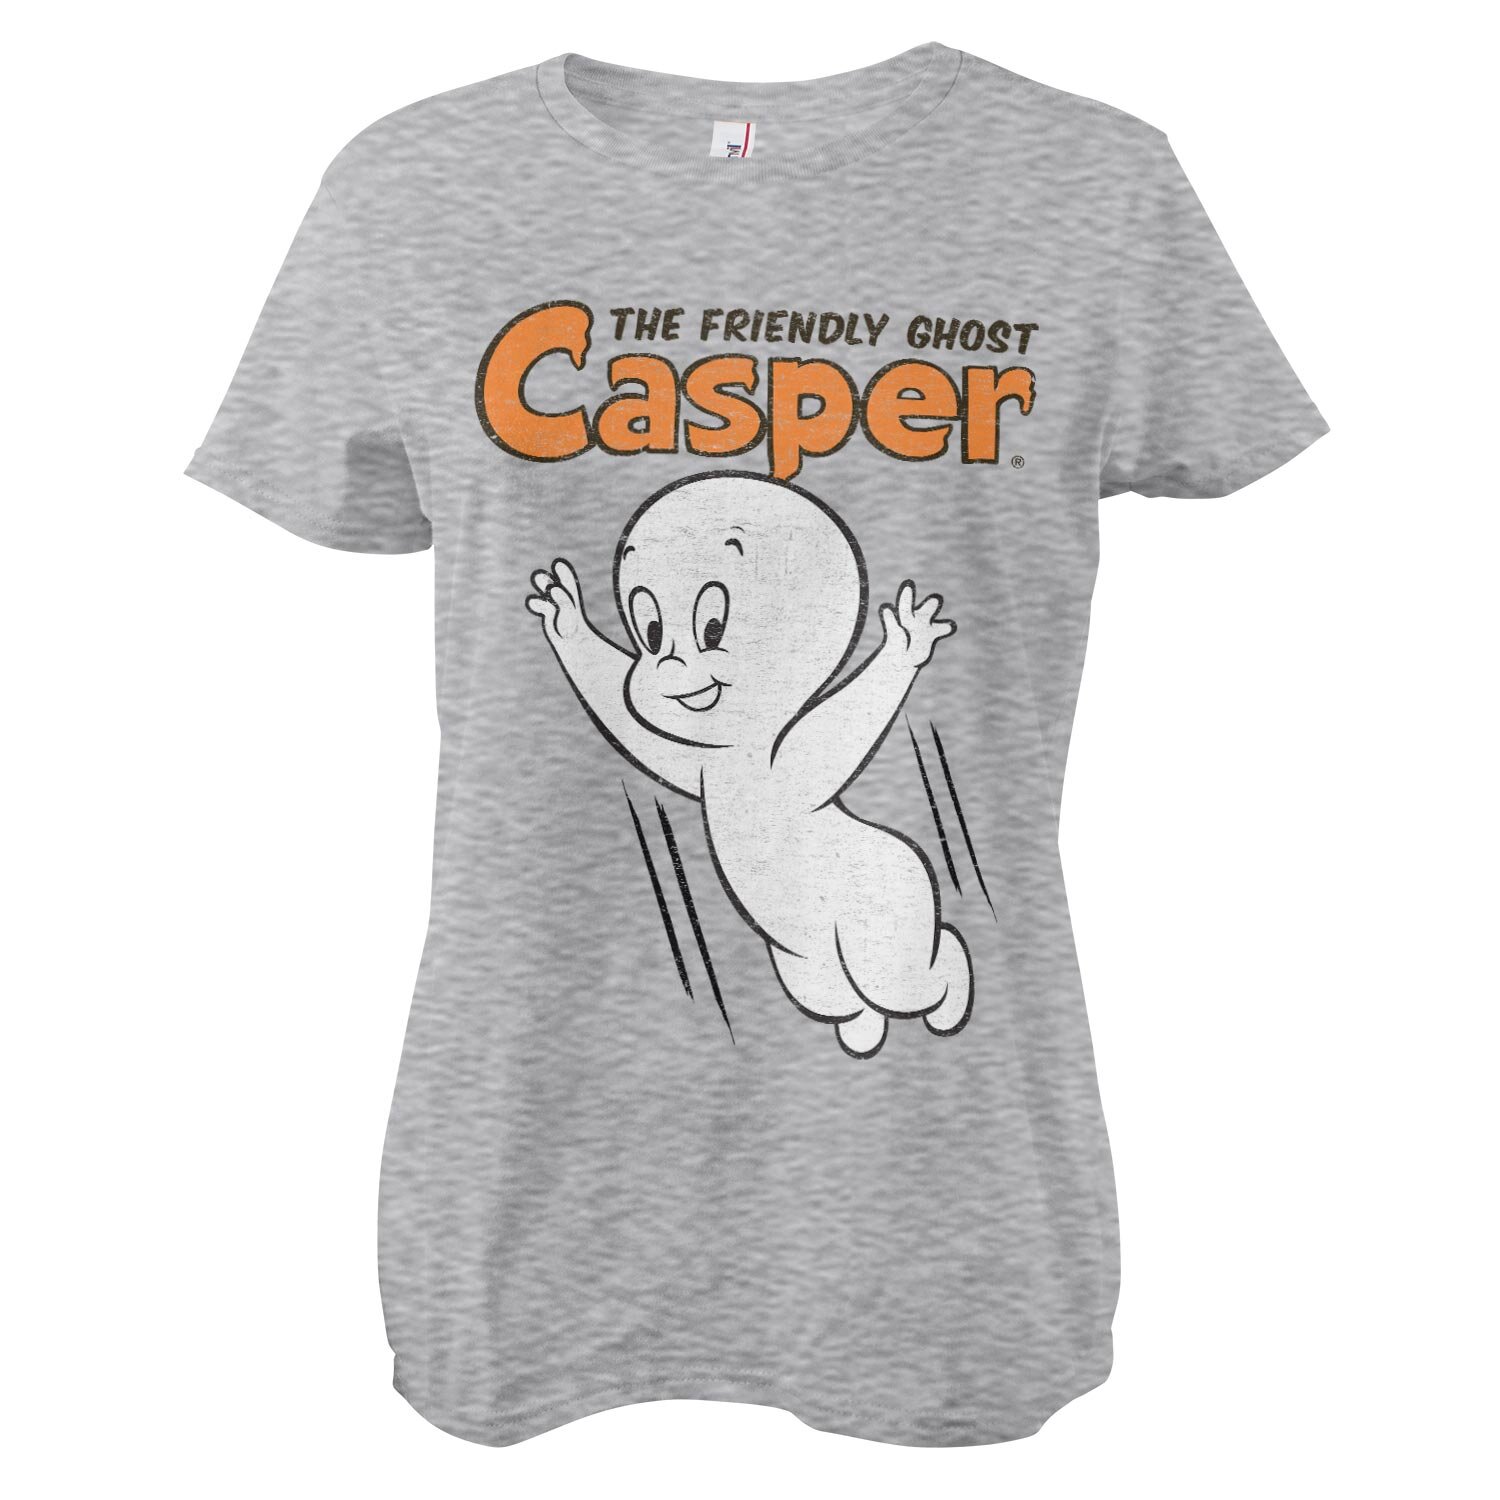 Casper - The Friendly Ghost Girly Tee